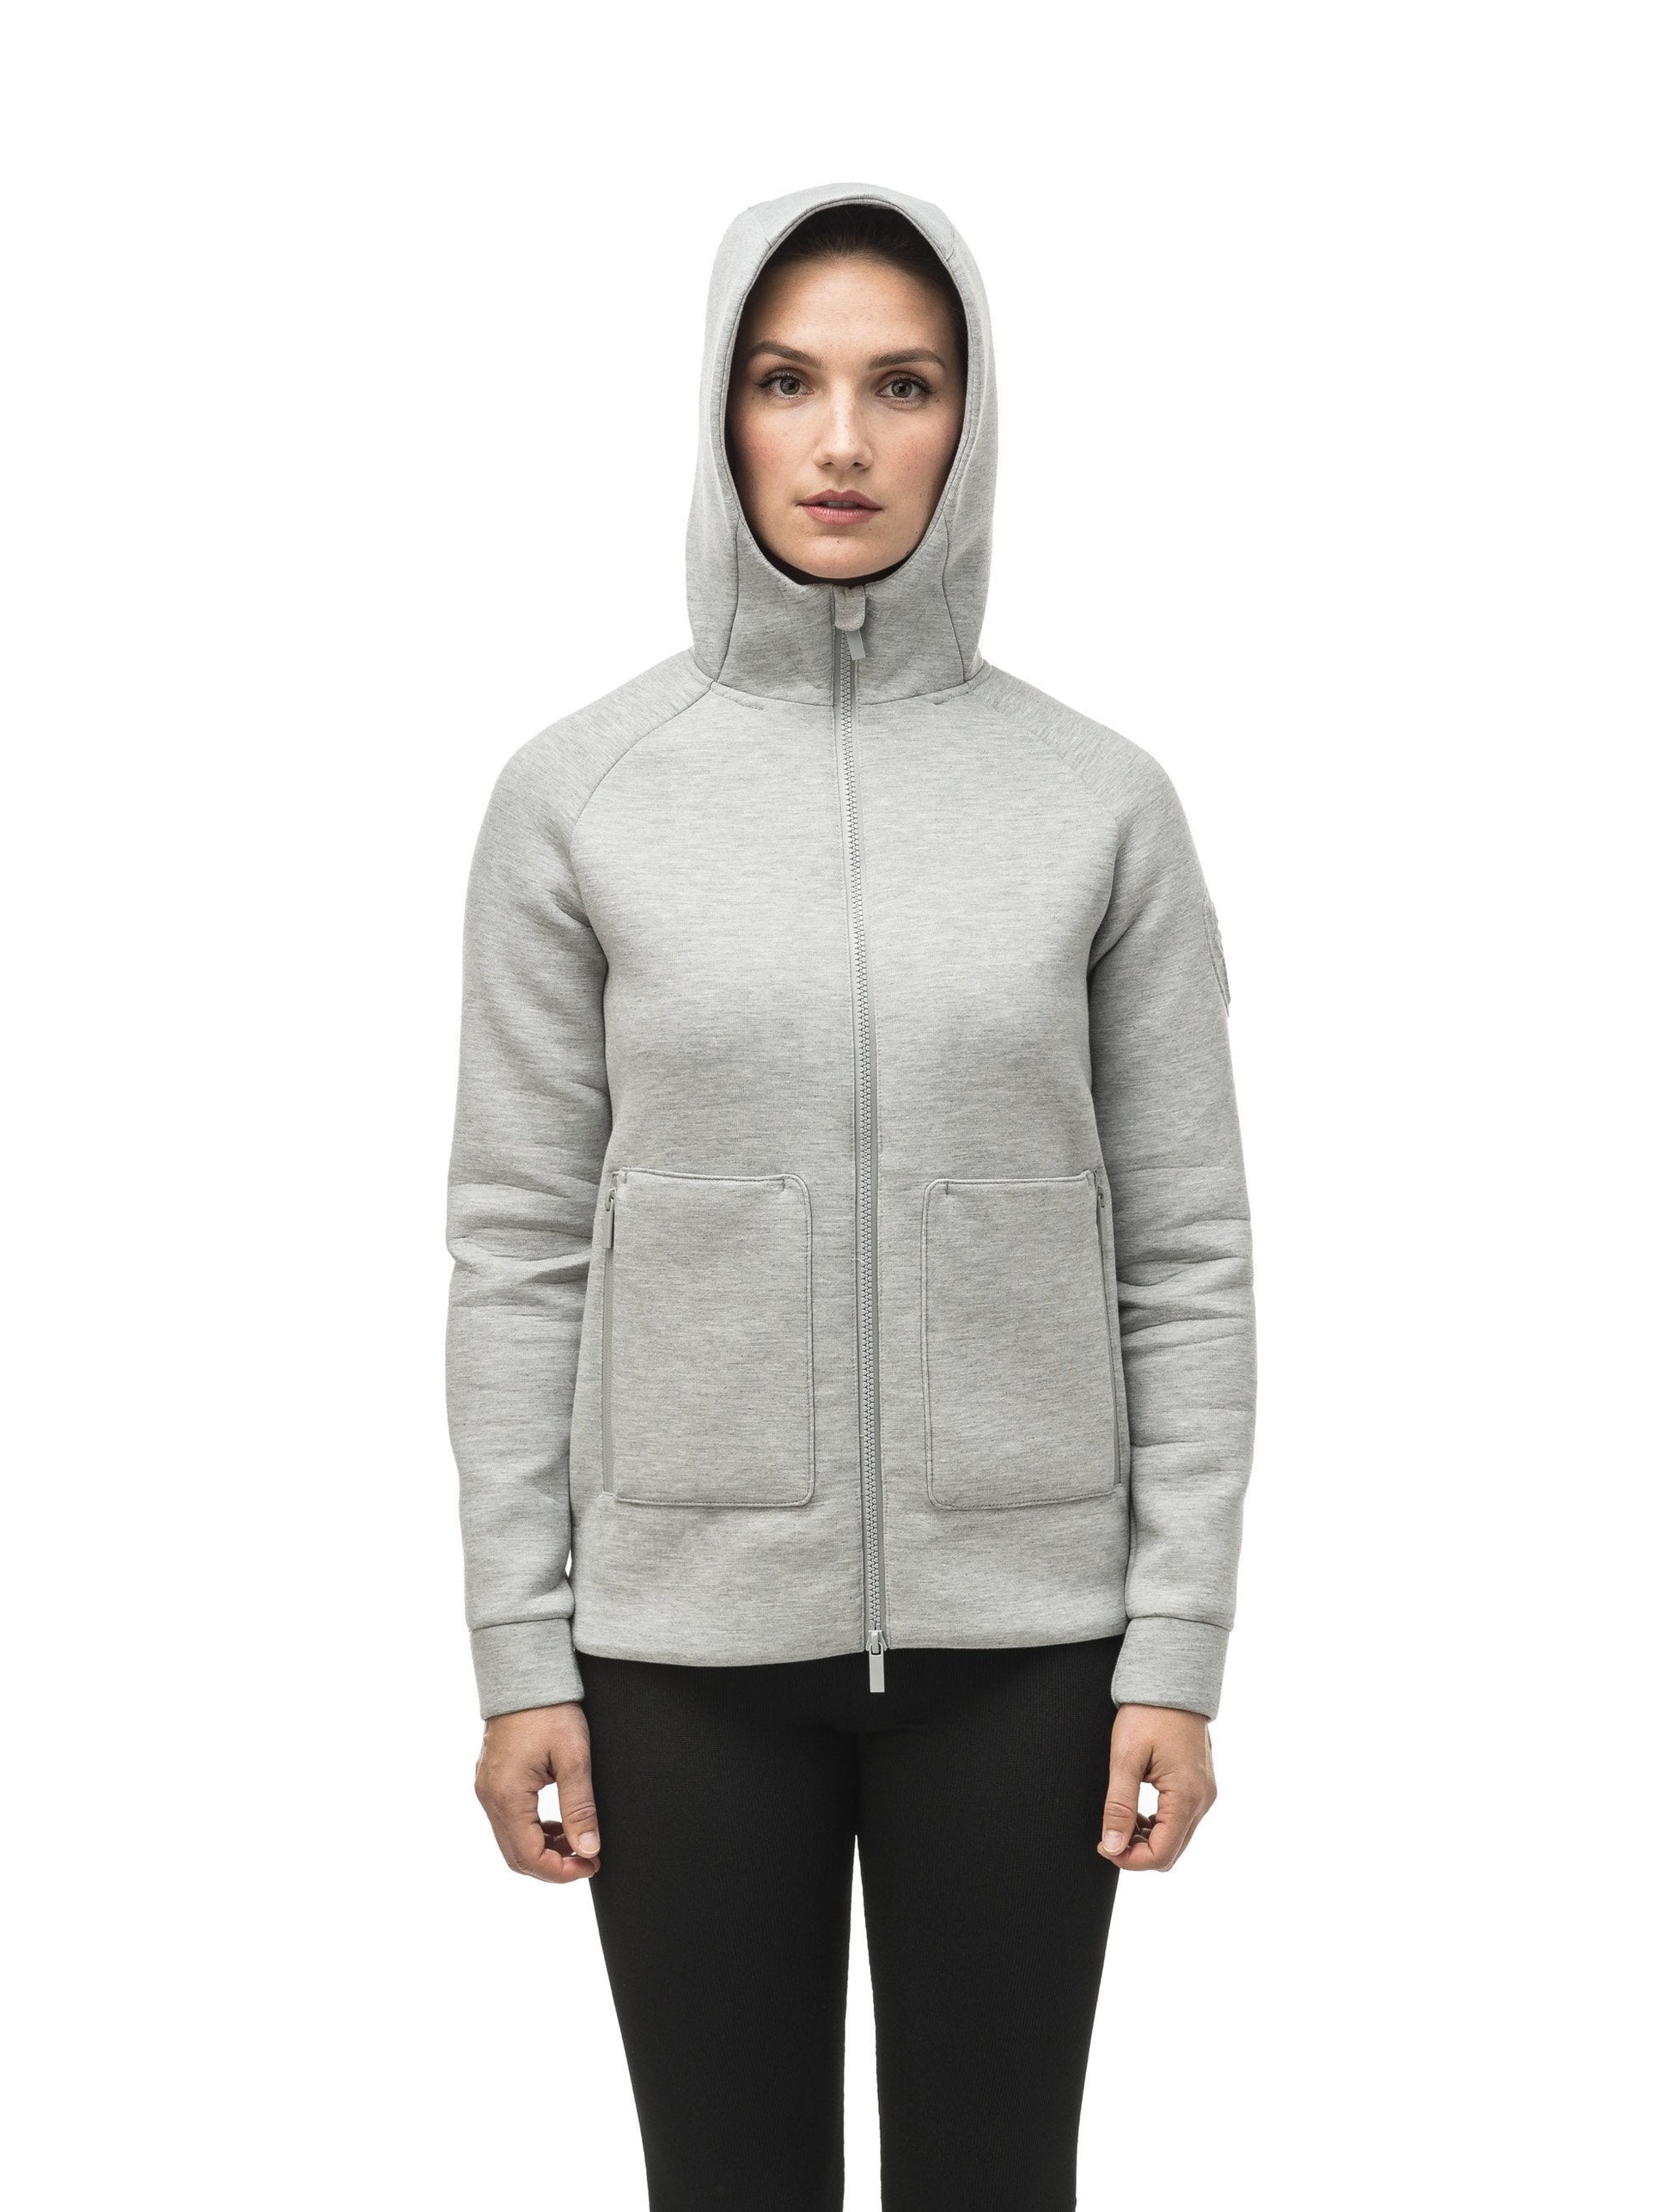 Structured women's hoodie with exposed zipper in Grey Melange